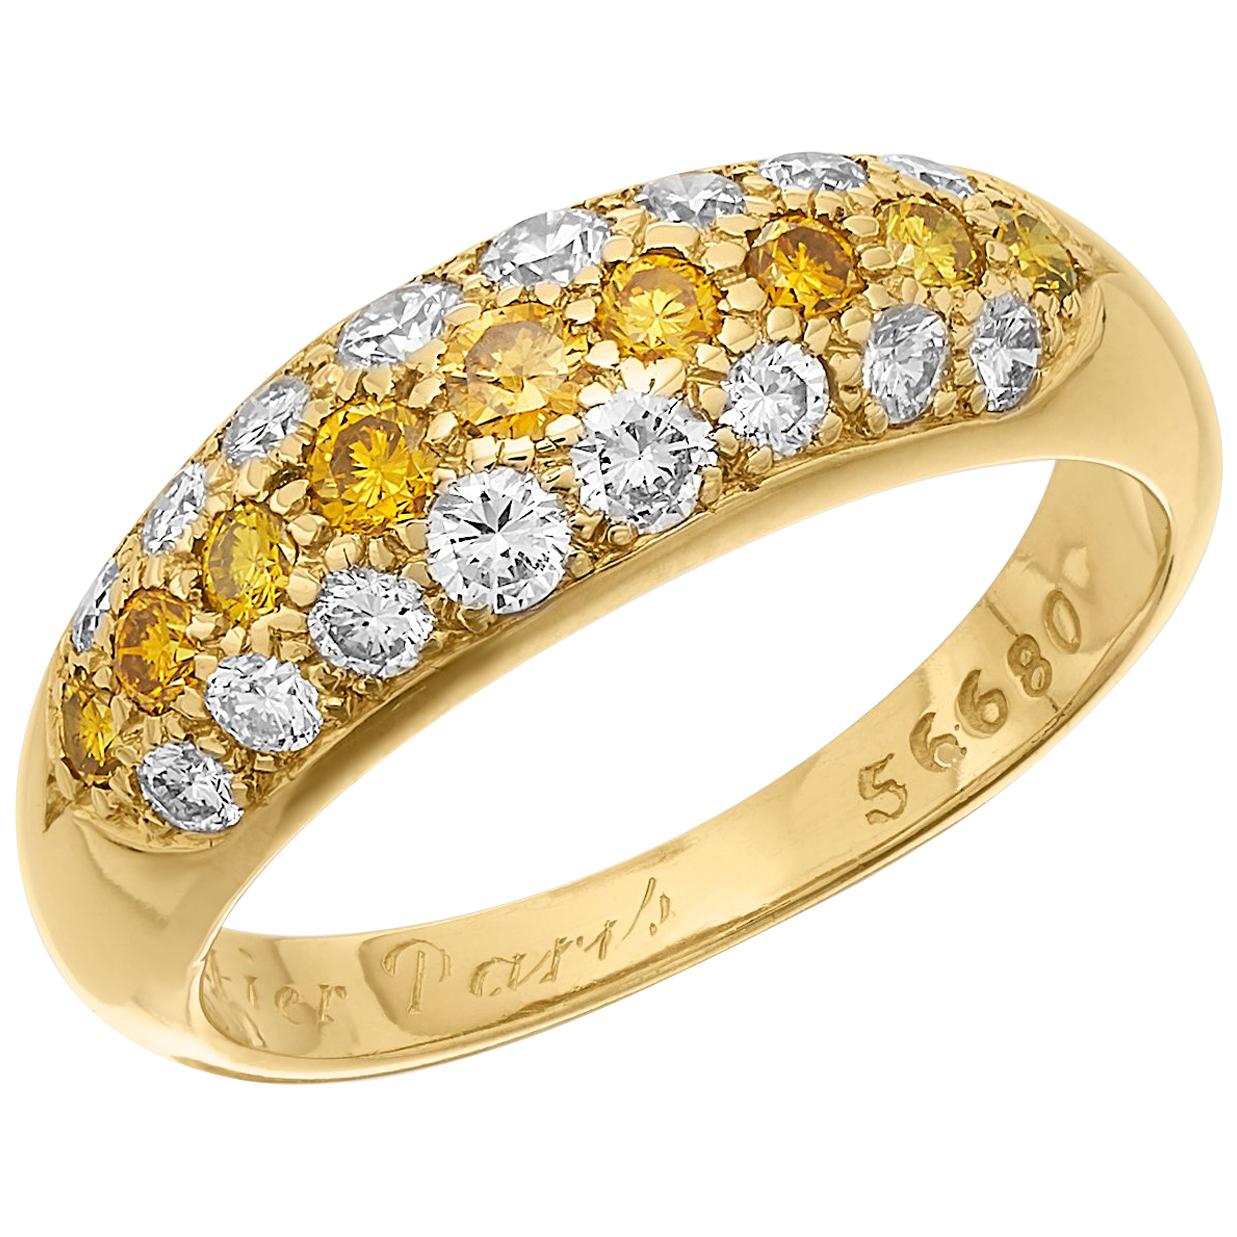 4.5ct 18ct rose gold tennis bracelet guaranteed g/h colour si purity natural diamonds